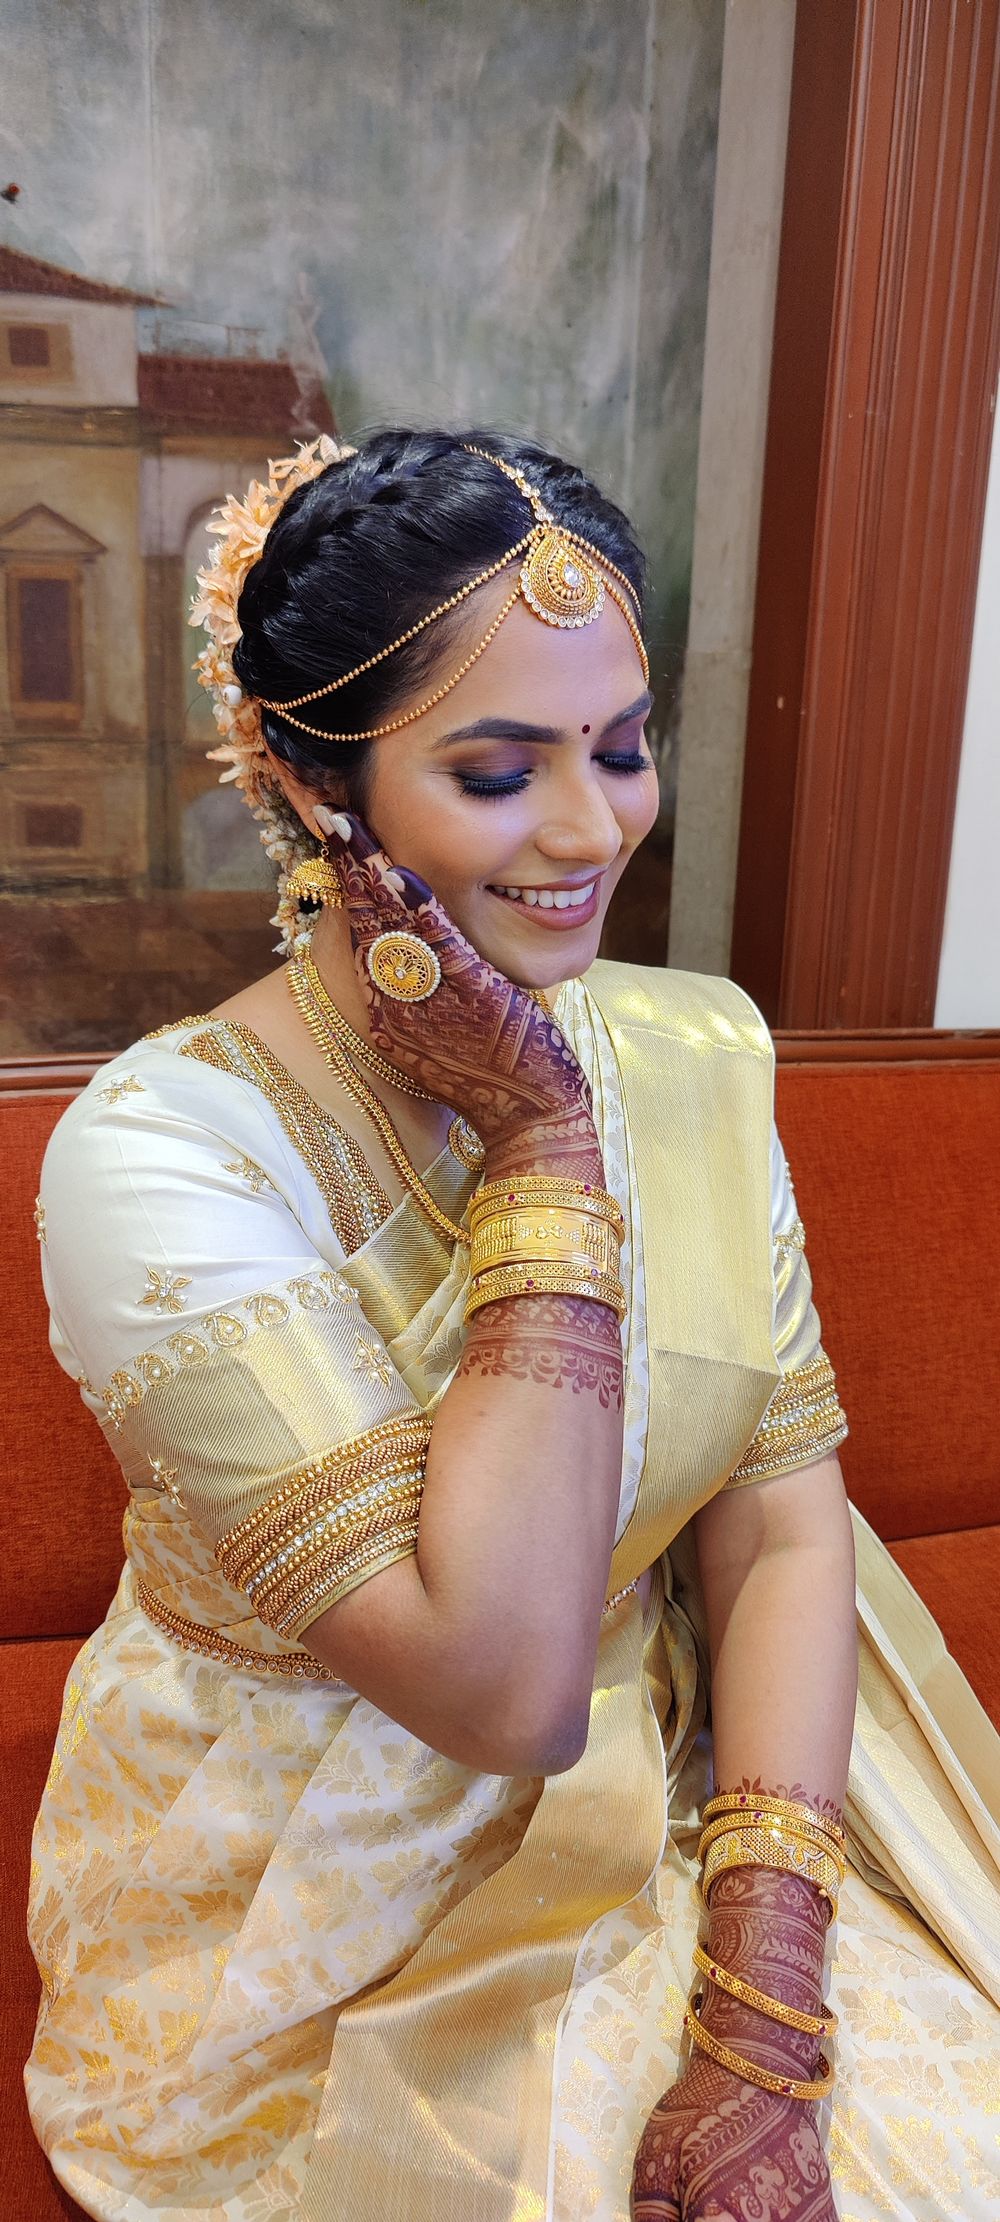 Photo From Signature bridal looks - By Tanaya Shetye Makeup Artist